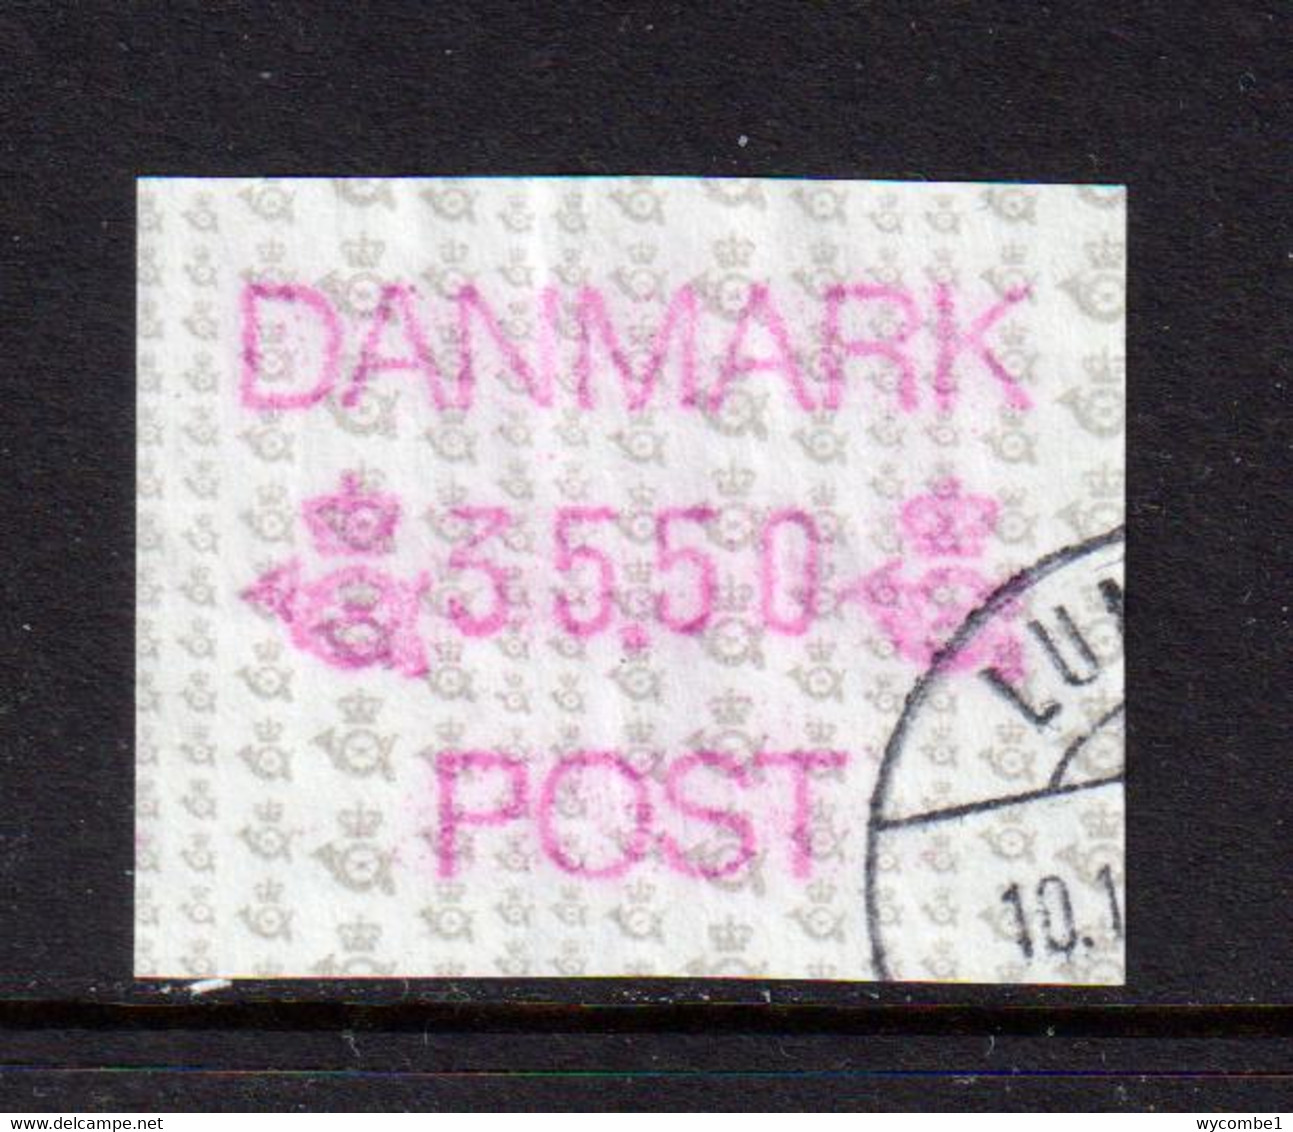 DENMARK - 1990 Frama Label Value As Shown Used As Scan - Automatenmarken [ATM]